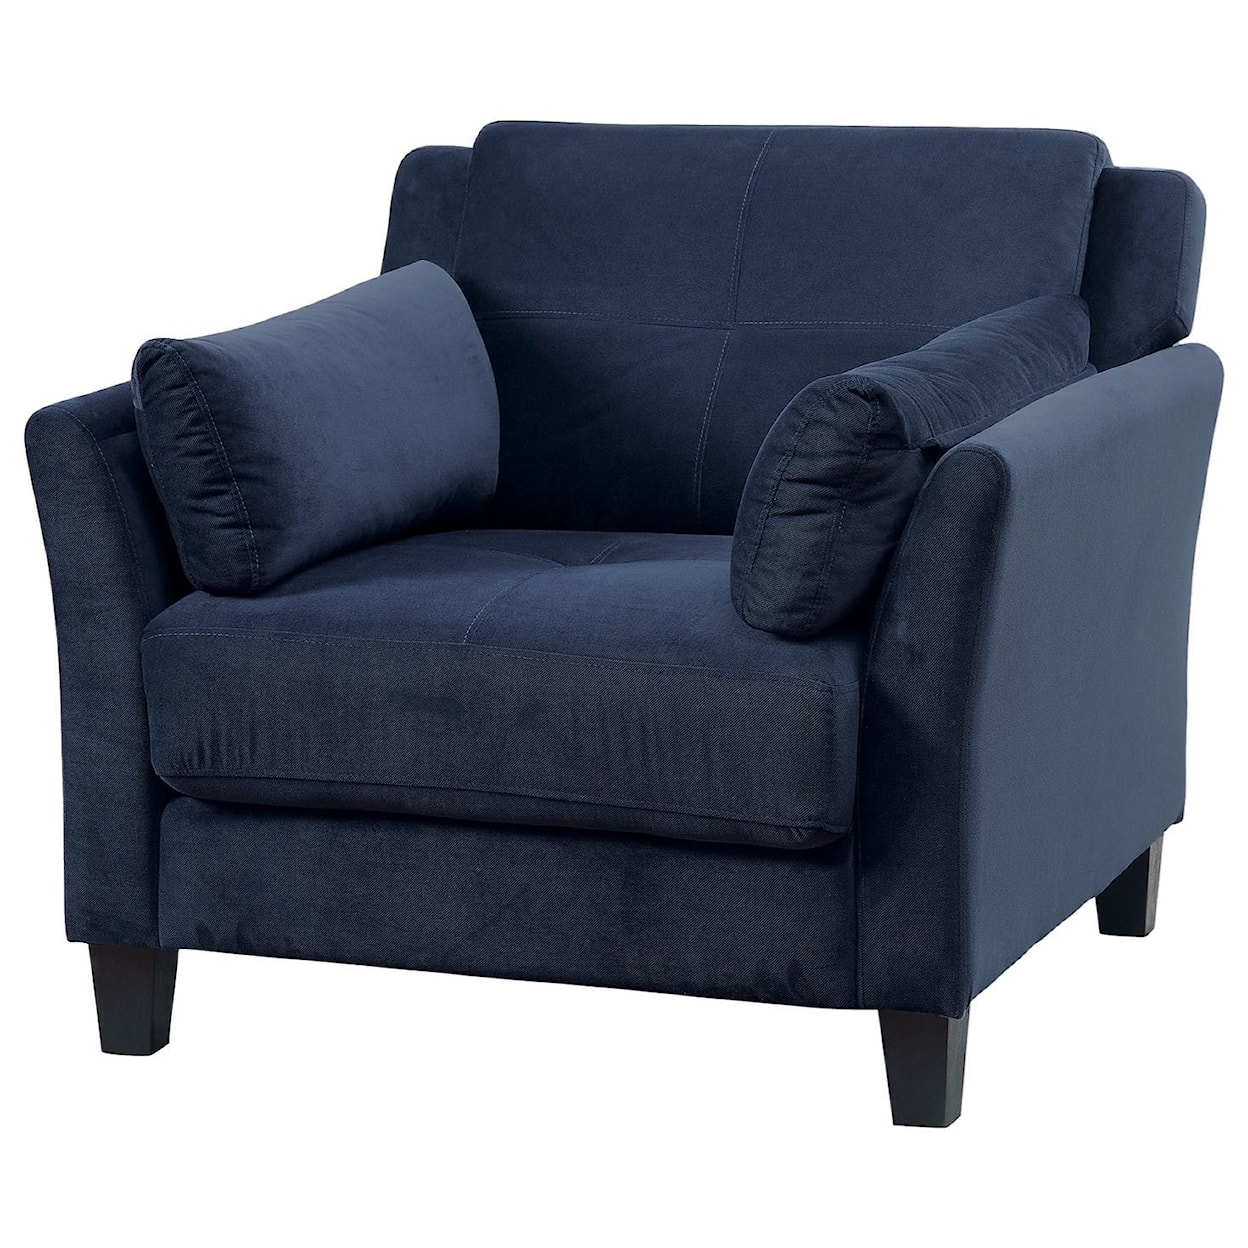 Furniture of America Ysabel Chair